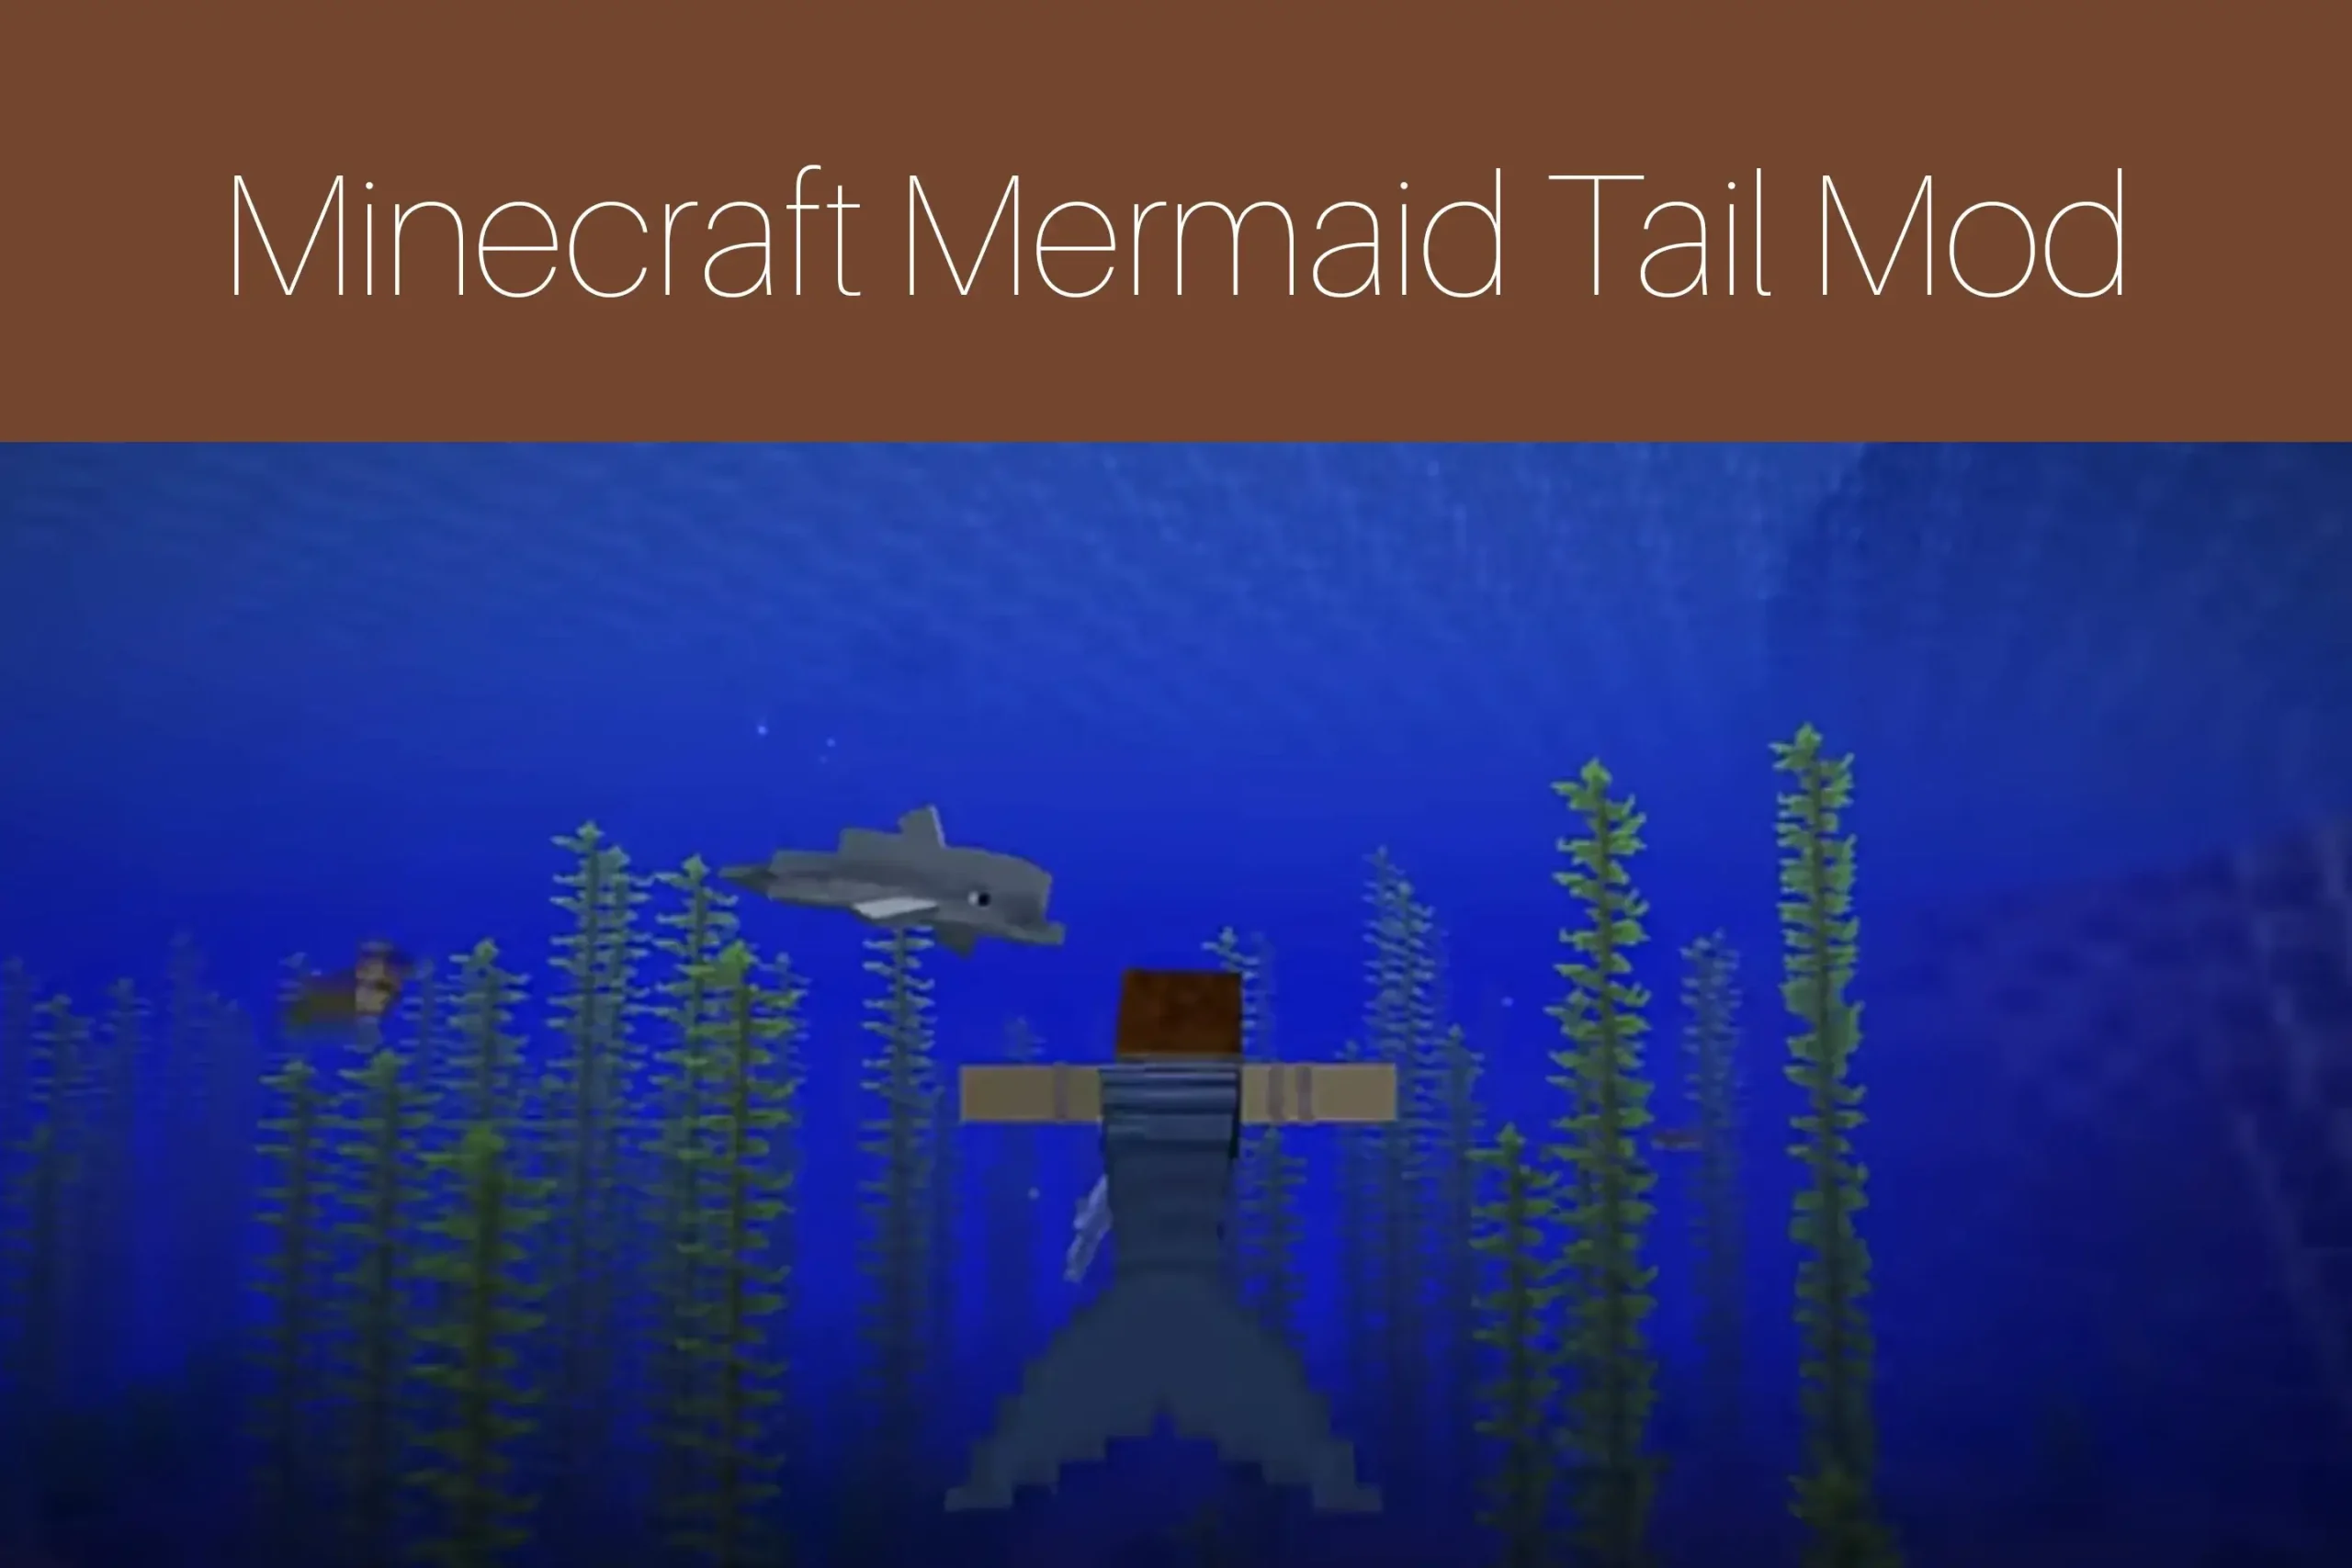 Minecraft Mermaid Tail Mod